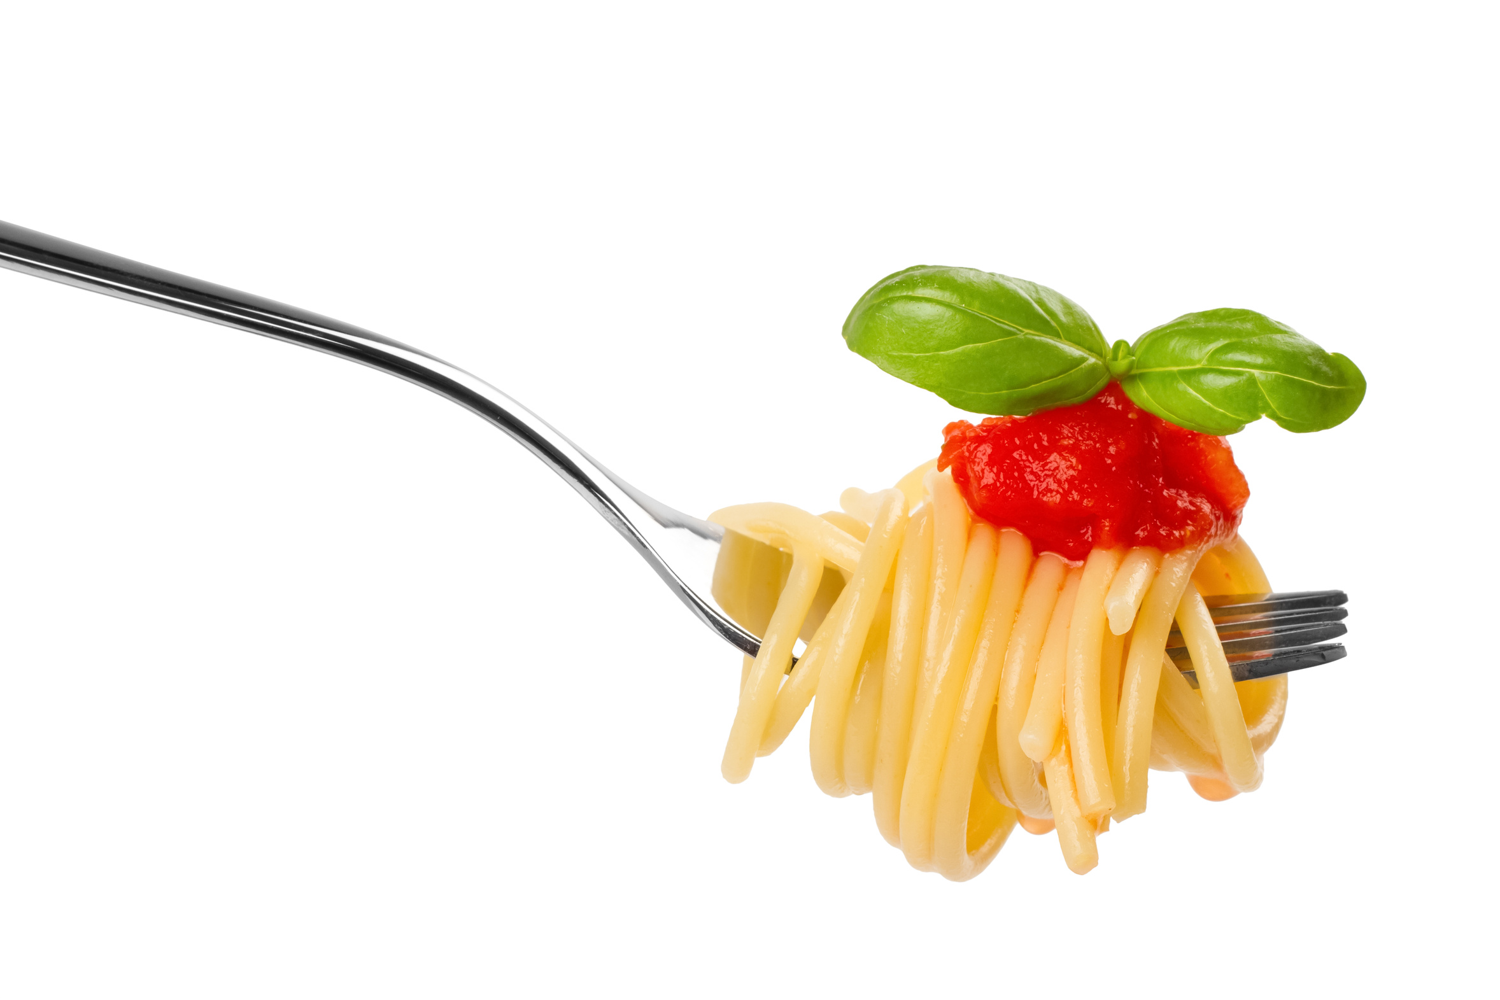 Forchetta spaghetti al pomodoro.jpg